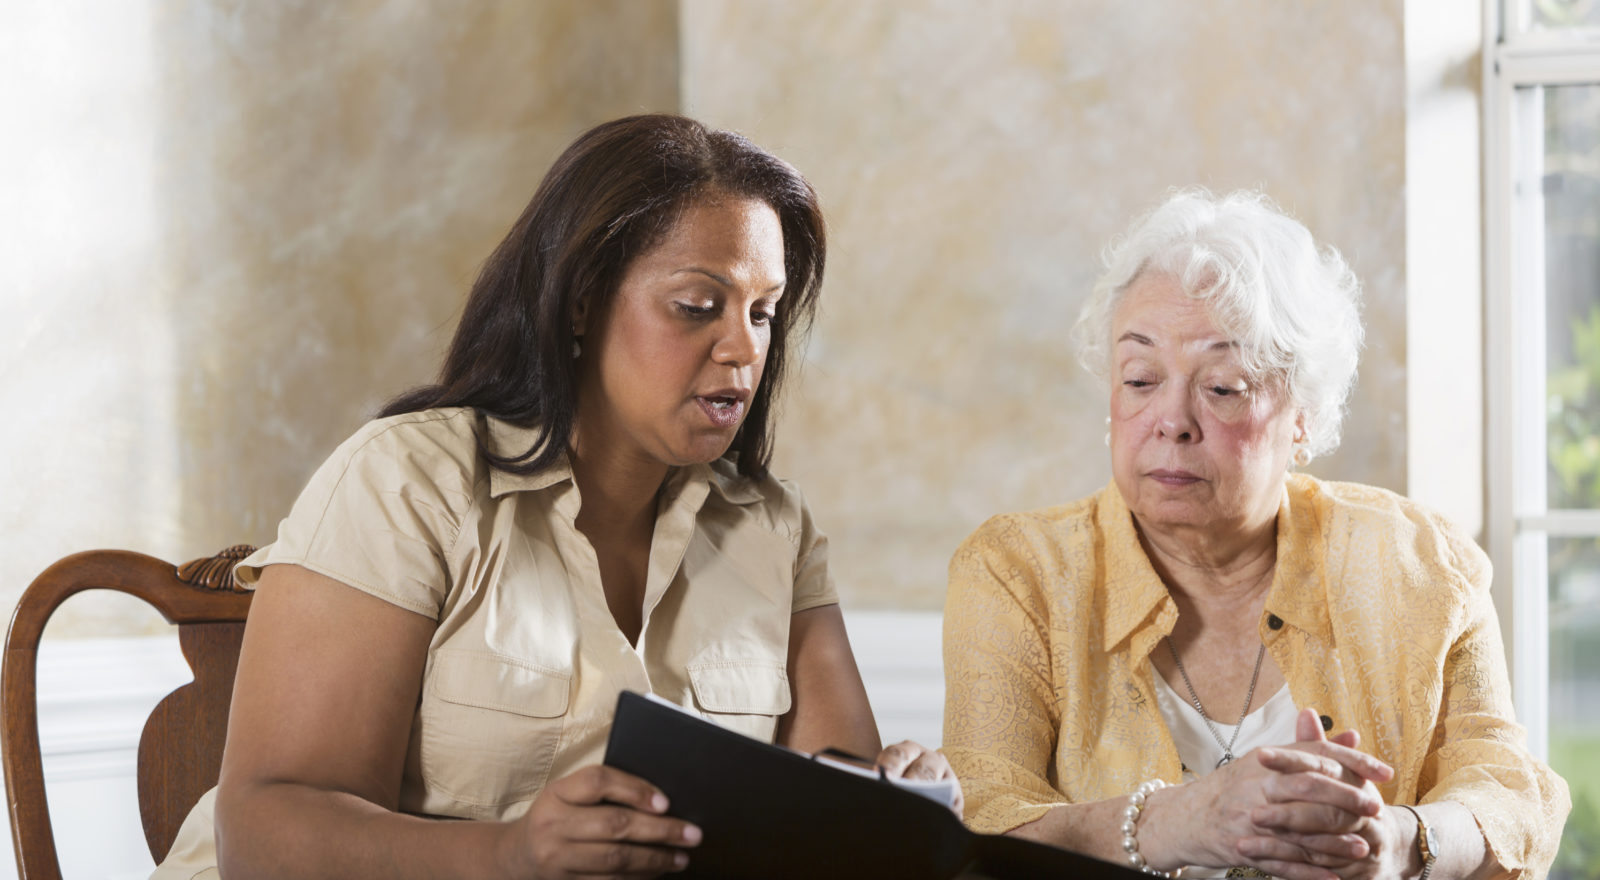 Mature Hispanic woman (50s) advising senior Hispanic woman (70s).